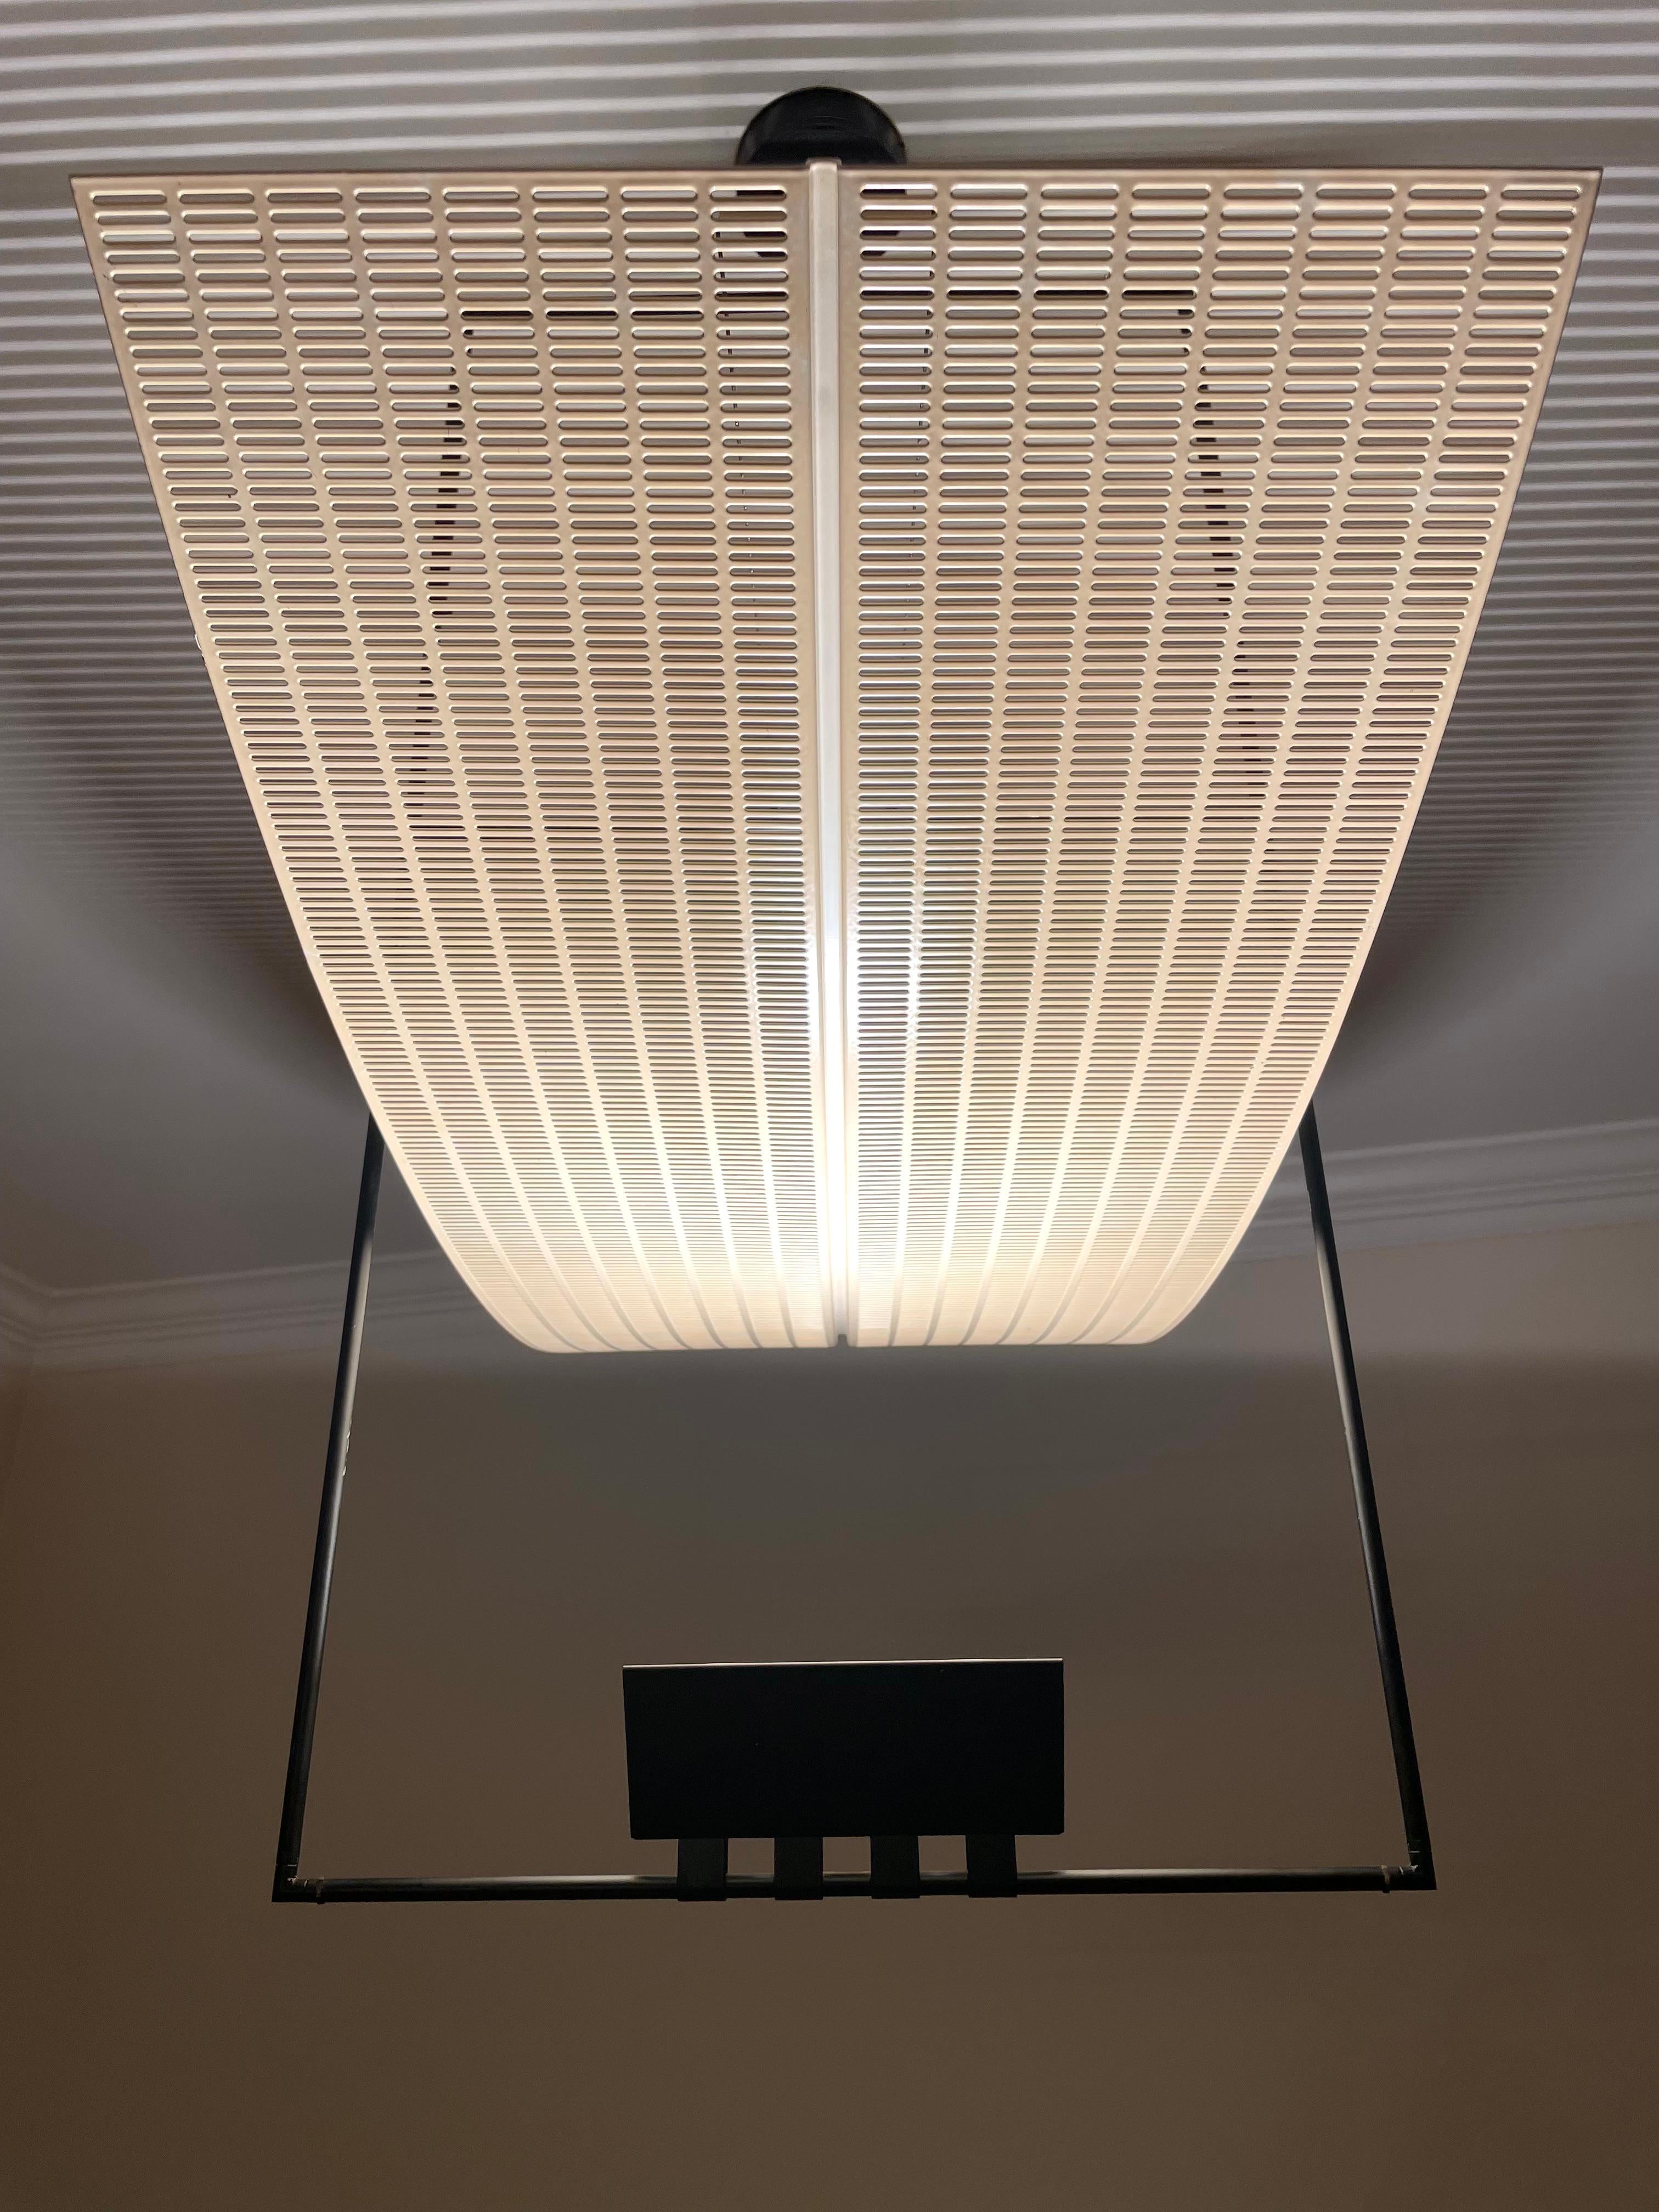 Steel Zefiro Hanging lamp designed by Mario Botta for Artemide